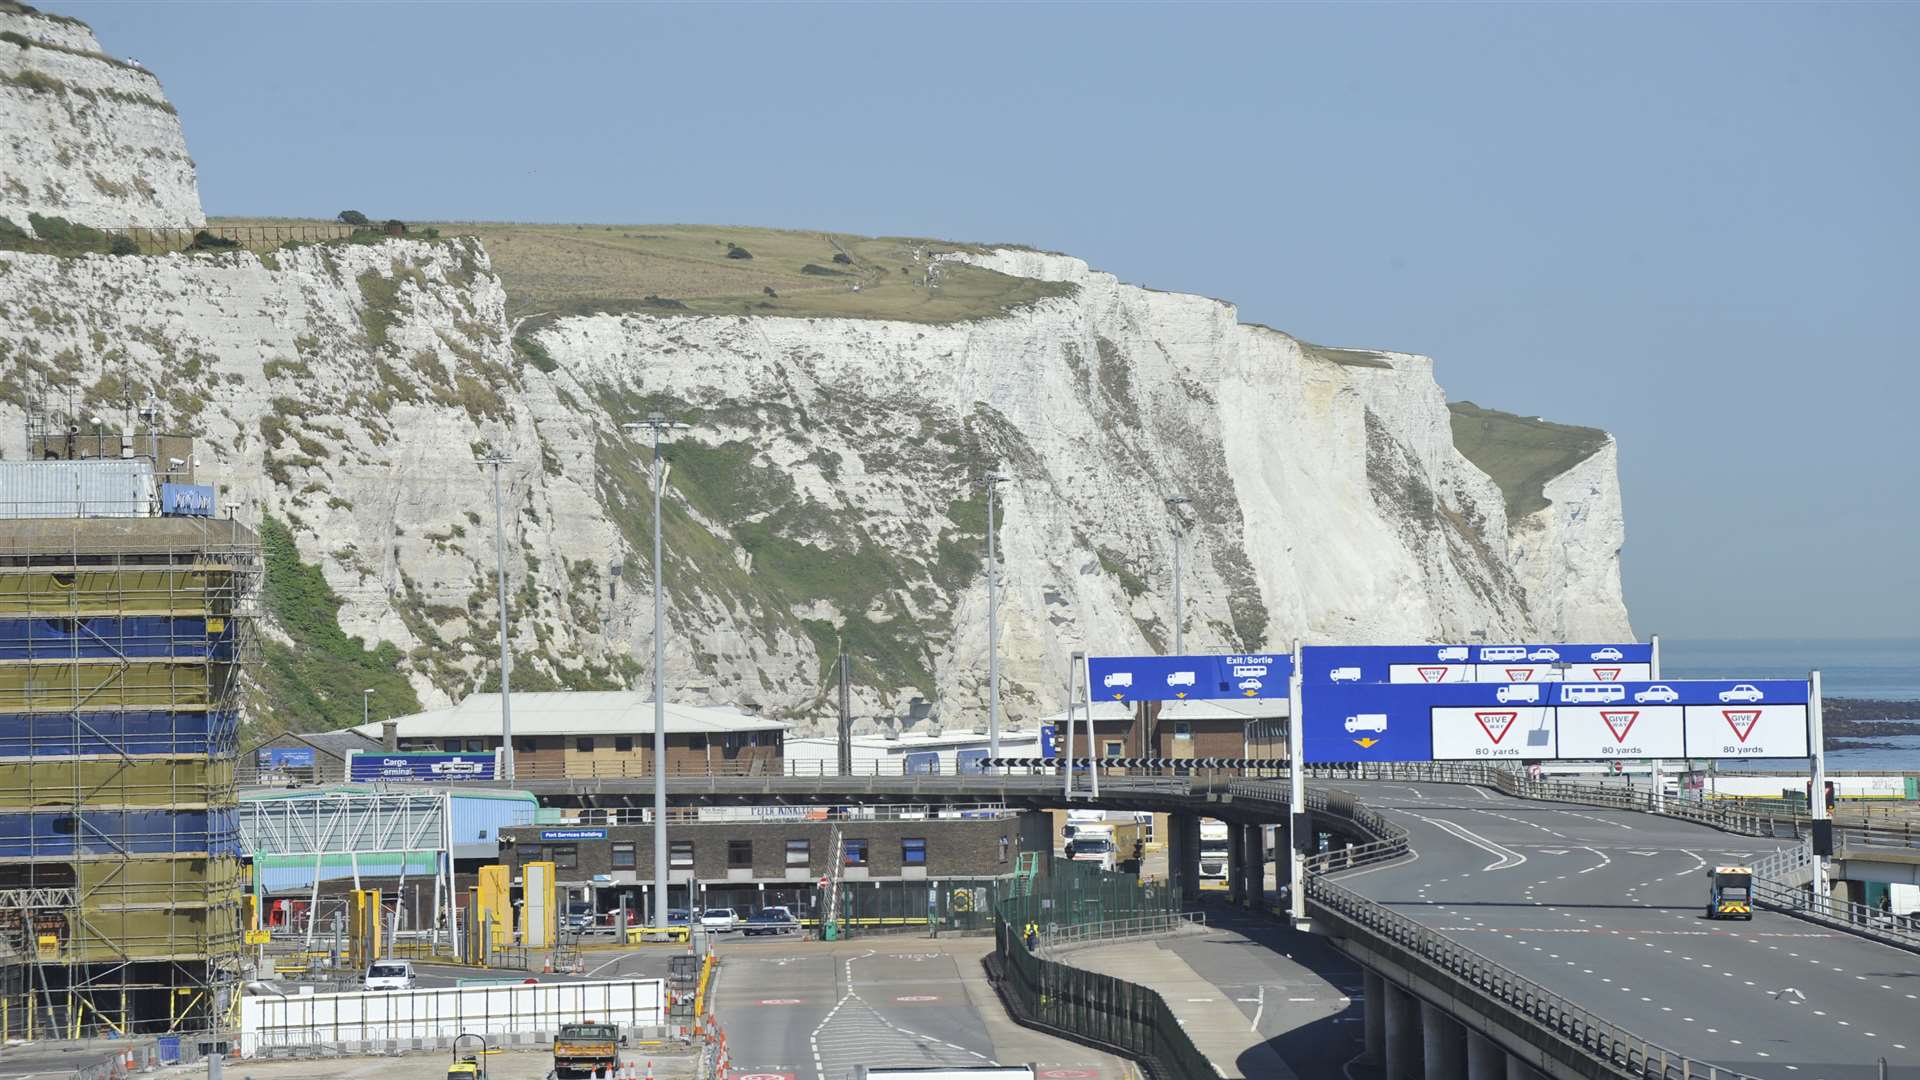 White Cliffs of Dover above the Eastern Docks